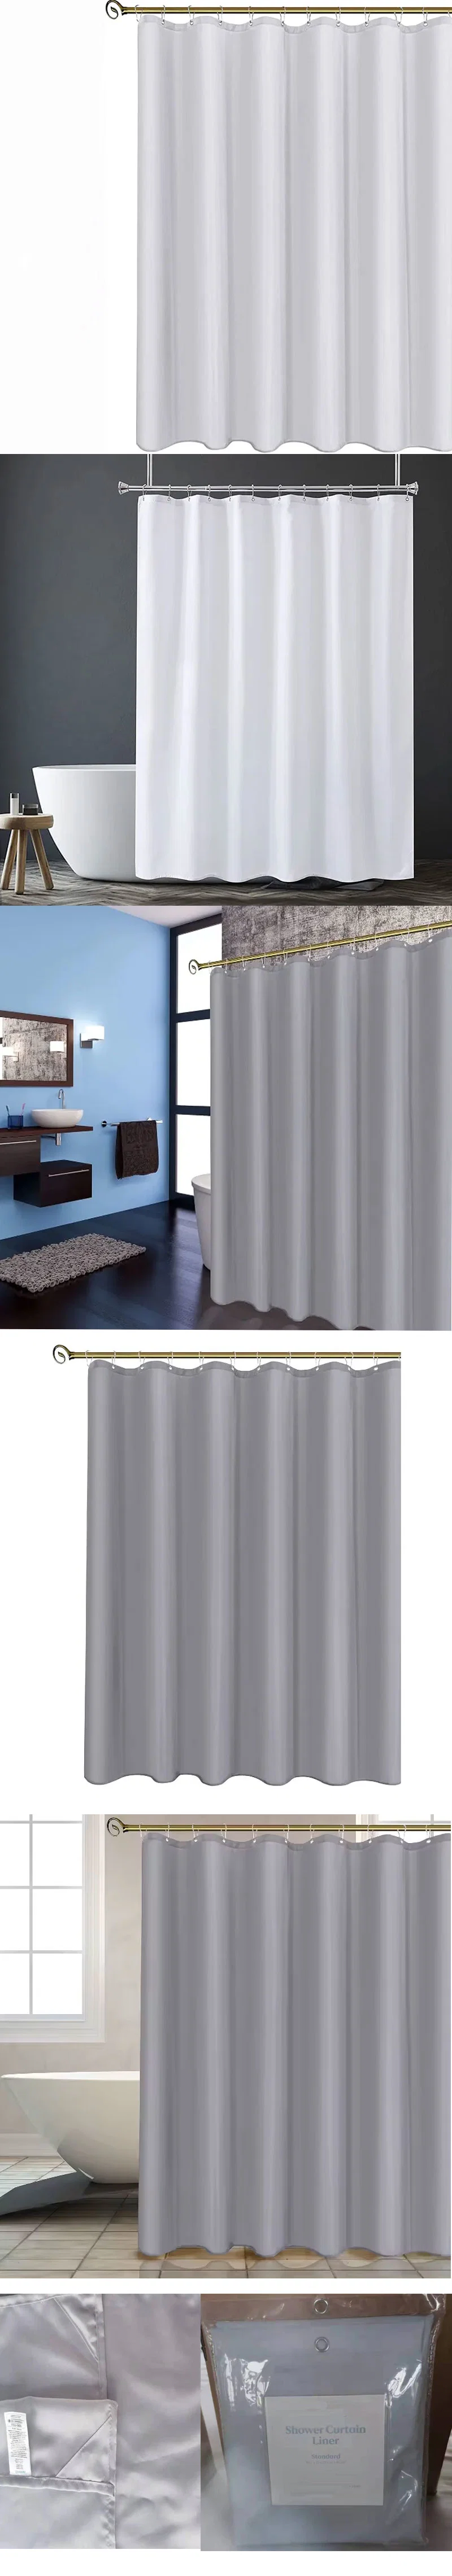 All-Season Home Bathroom Bathtub Curtains Waterproof Durable 100% Polyester Fabric Shower Curtains